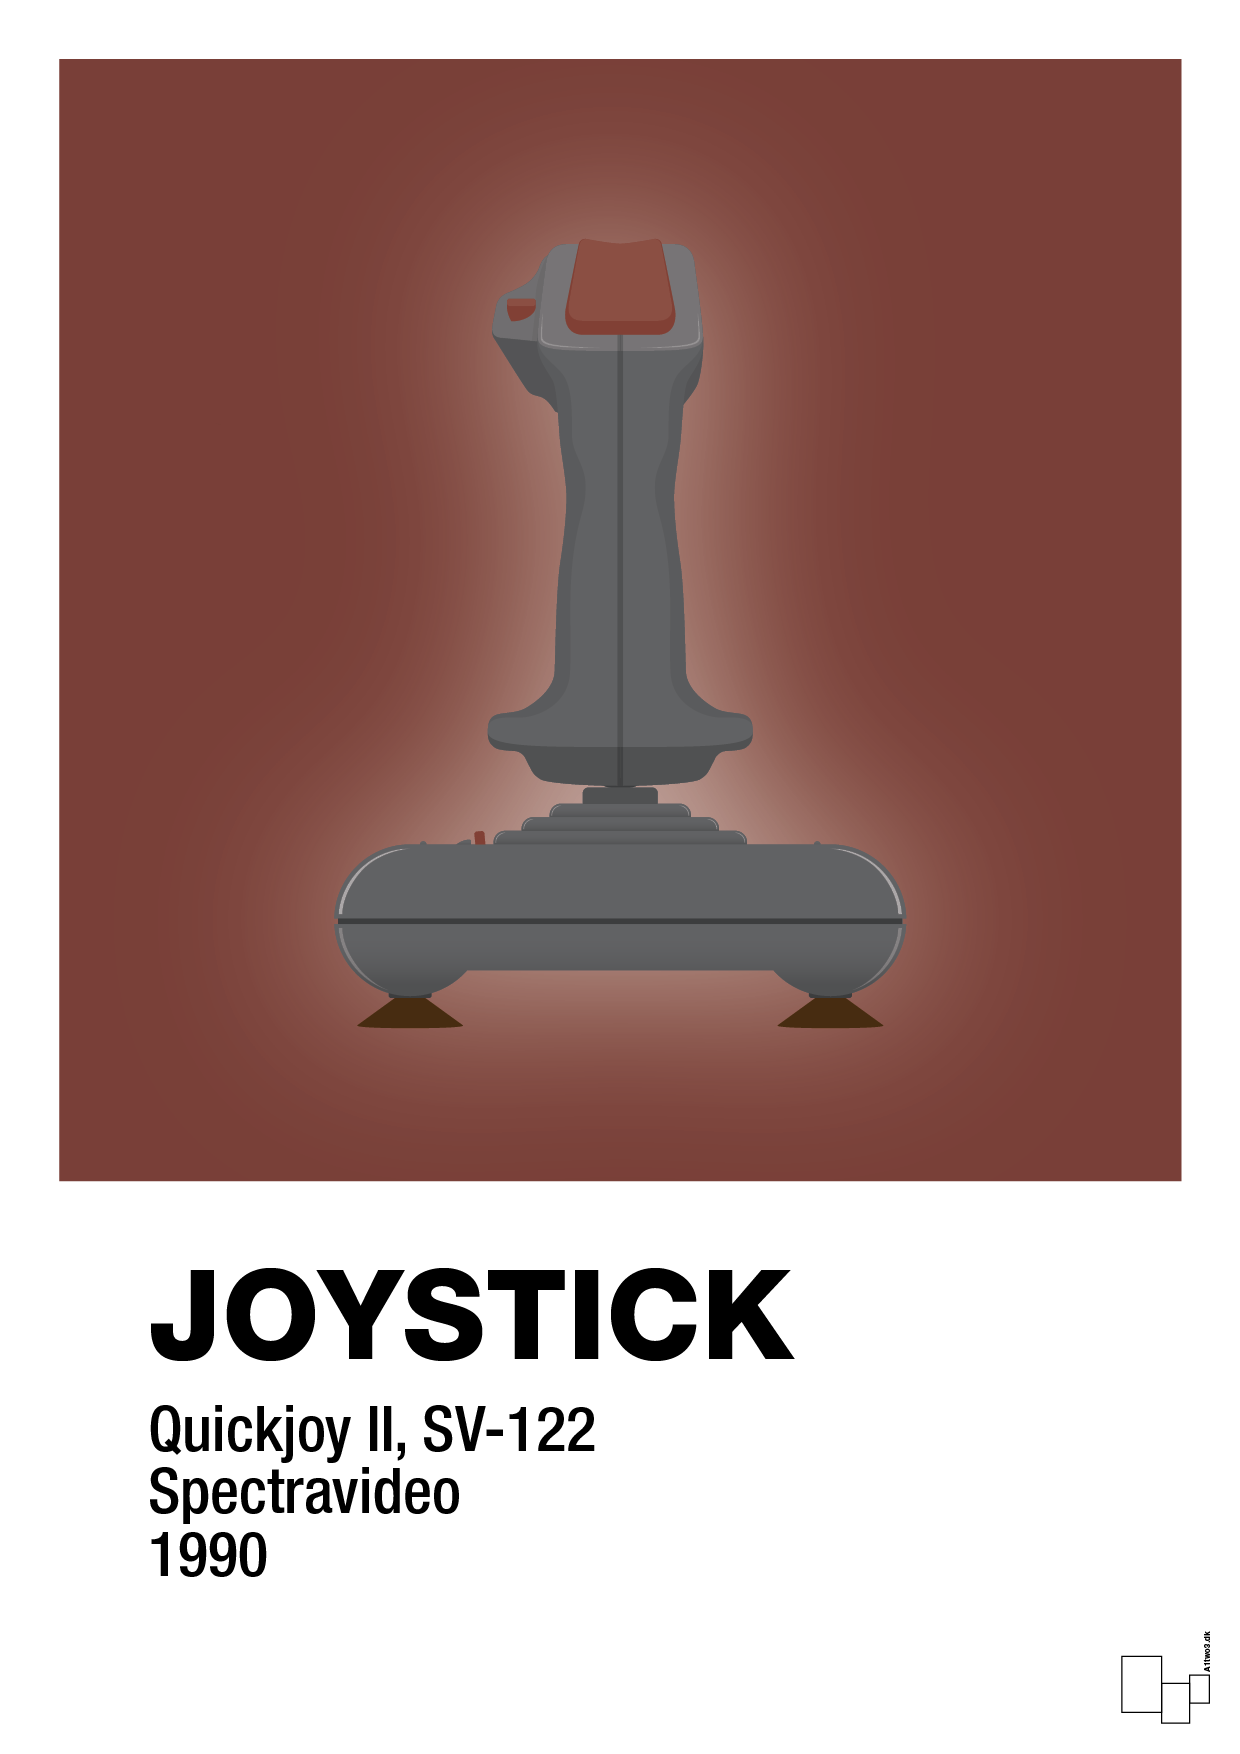 joystick quickjoy II - Plakat med Grafik i Red Pepper